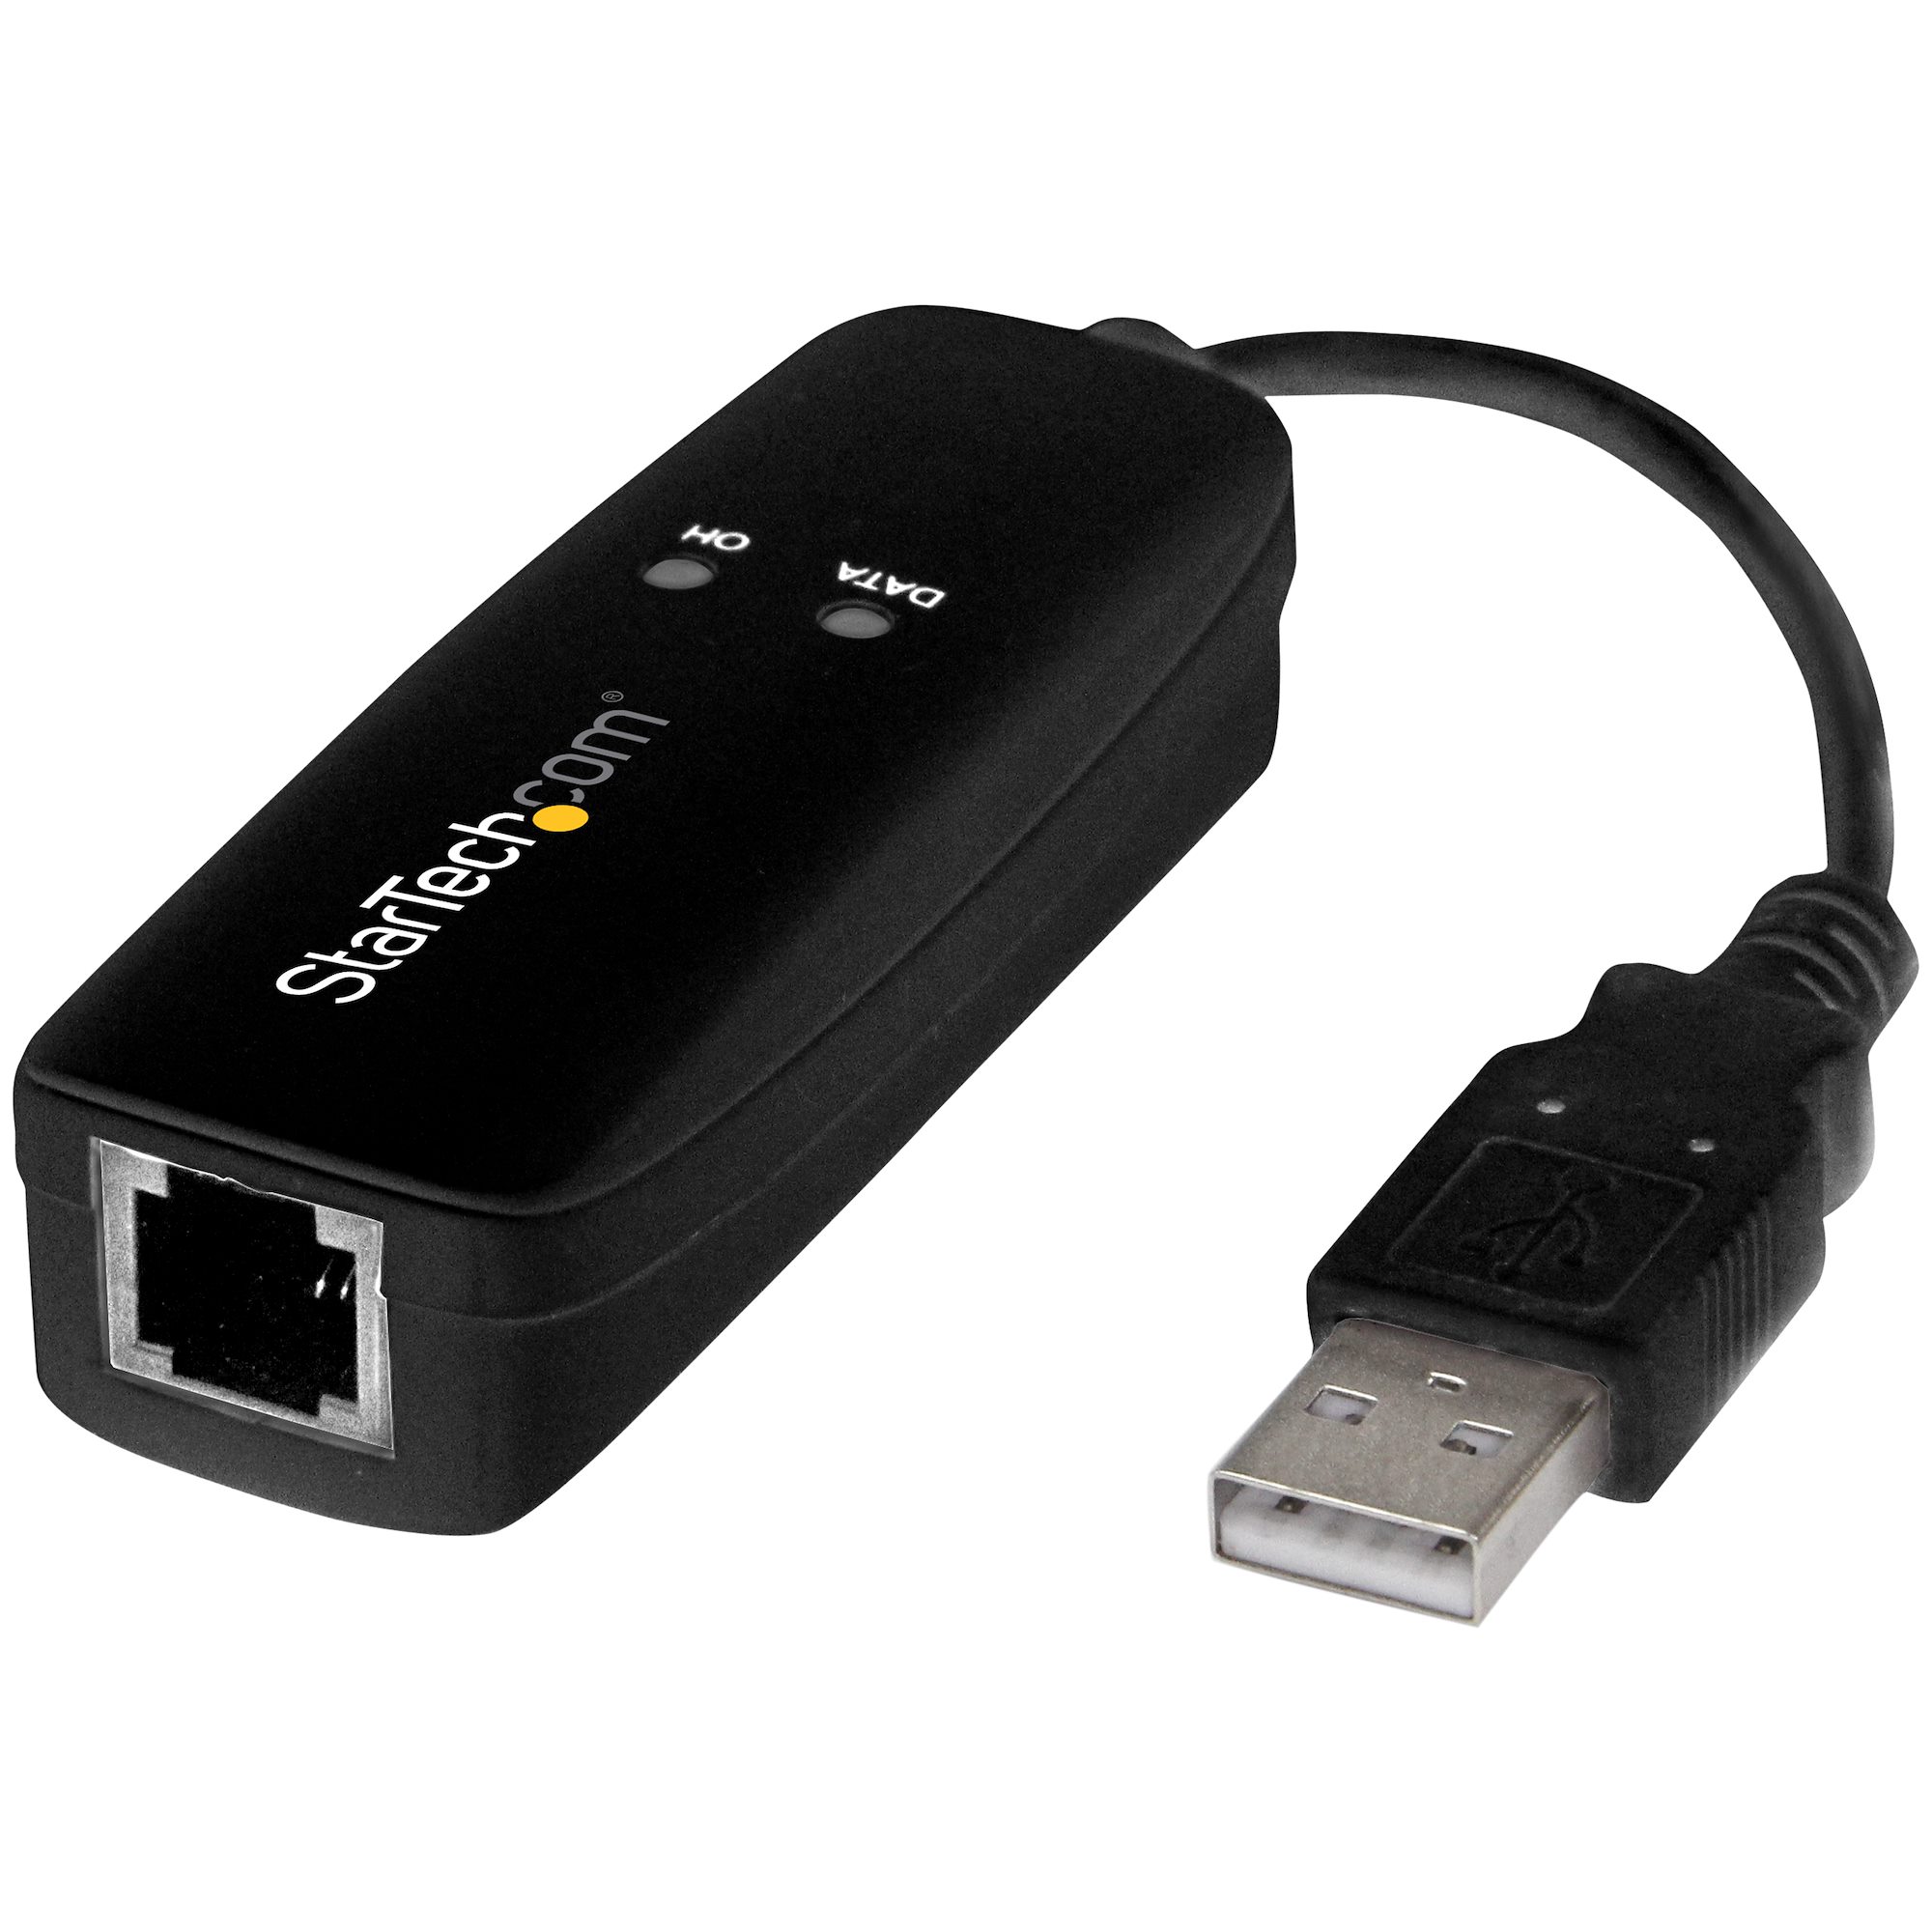 Bonus Corrode mirror External USB 2.0 Fax/Data Modem 56K V.92 - Bluetooth & Telecom Adapters |  StarTech.com